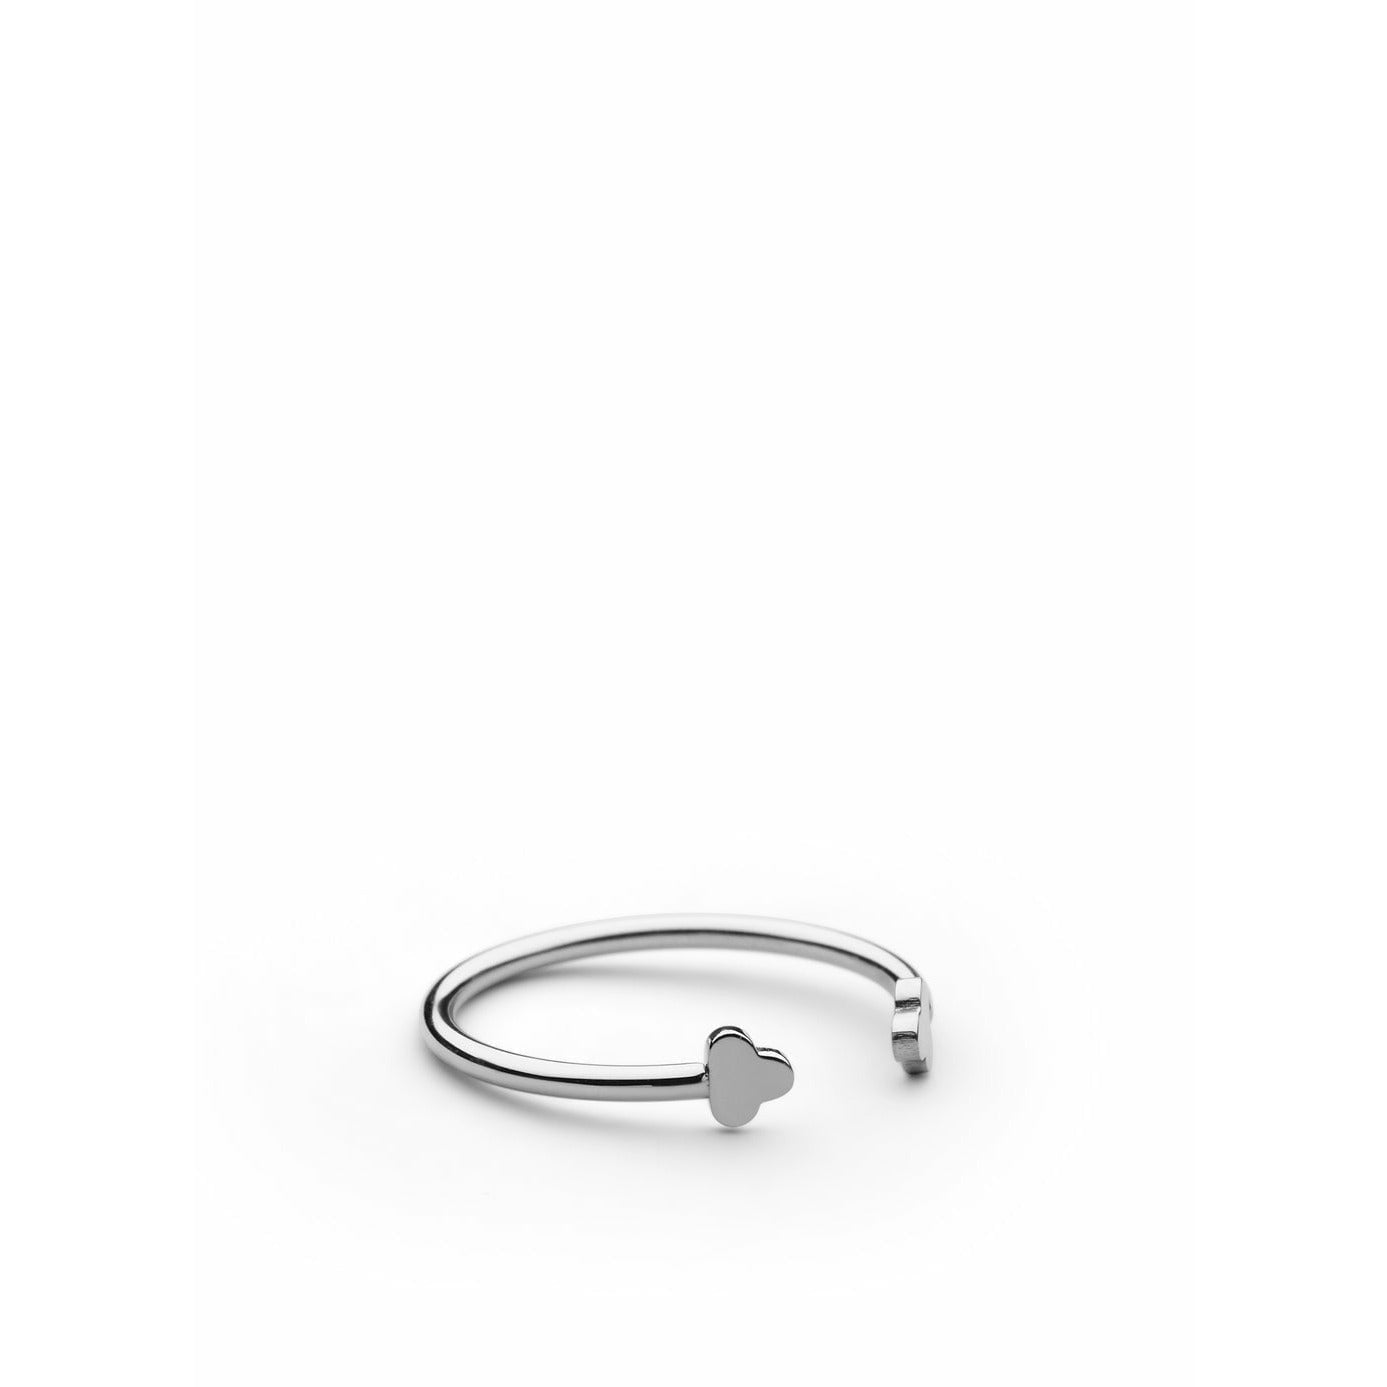 Skultuna Open Key Ring Acero pulido mediano, Ø1,73 cm